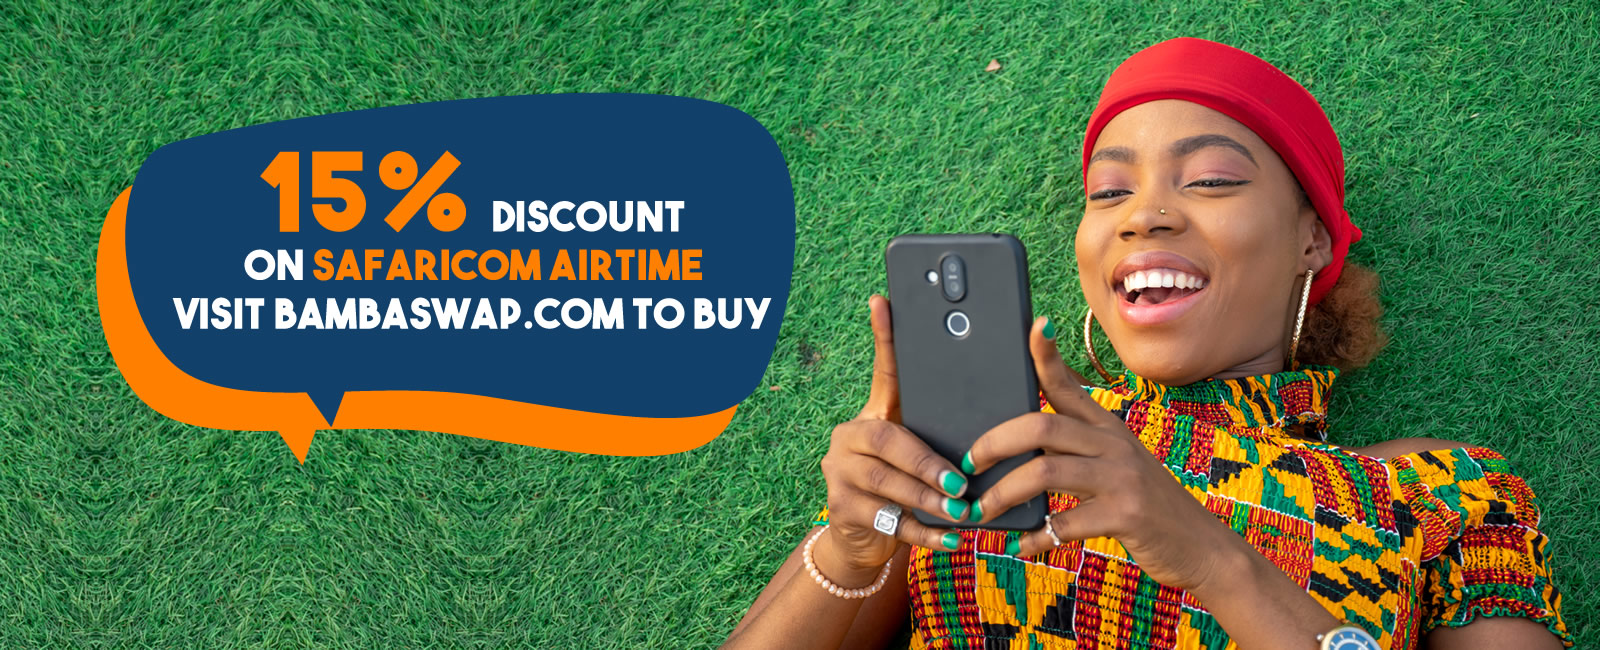 bambaswap - Buy the cheapest safaricom airtime in Kenya